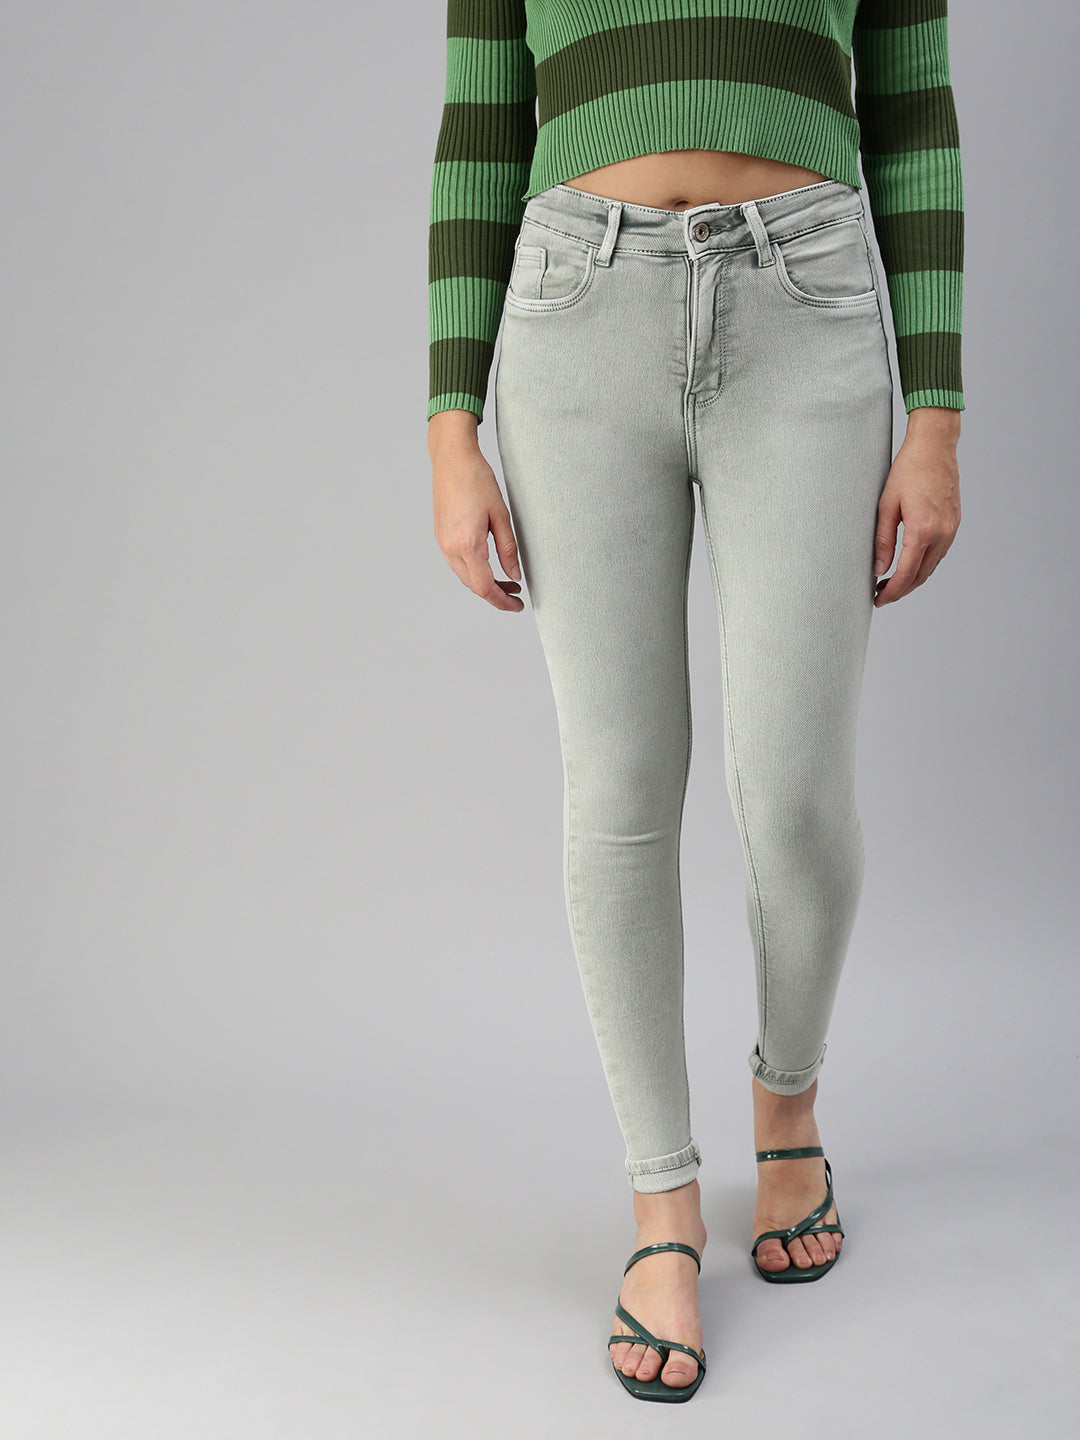 Women's Green Solid Denim Skinny Jeans